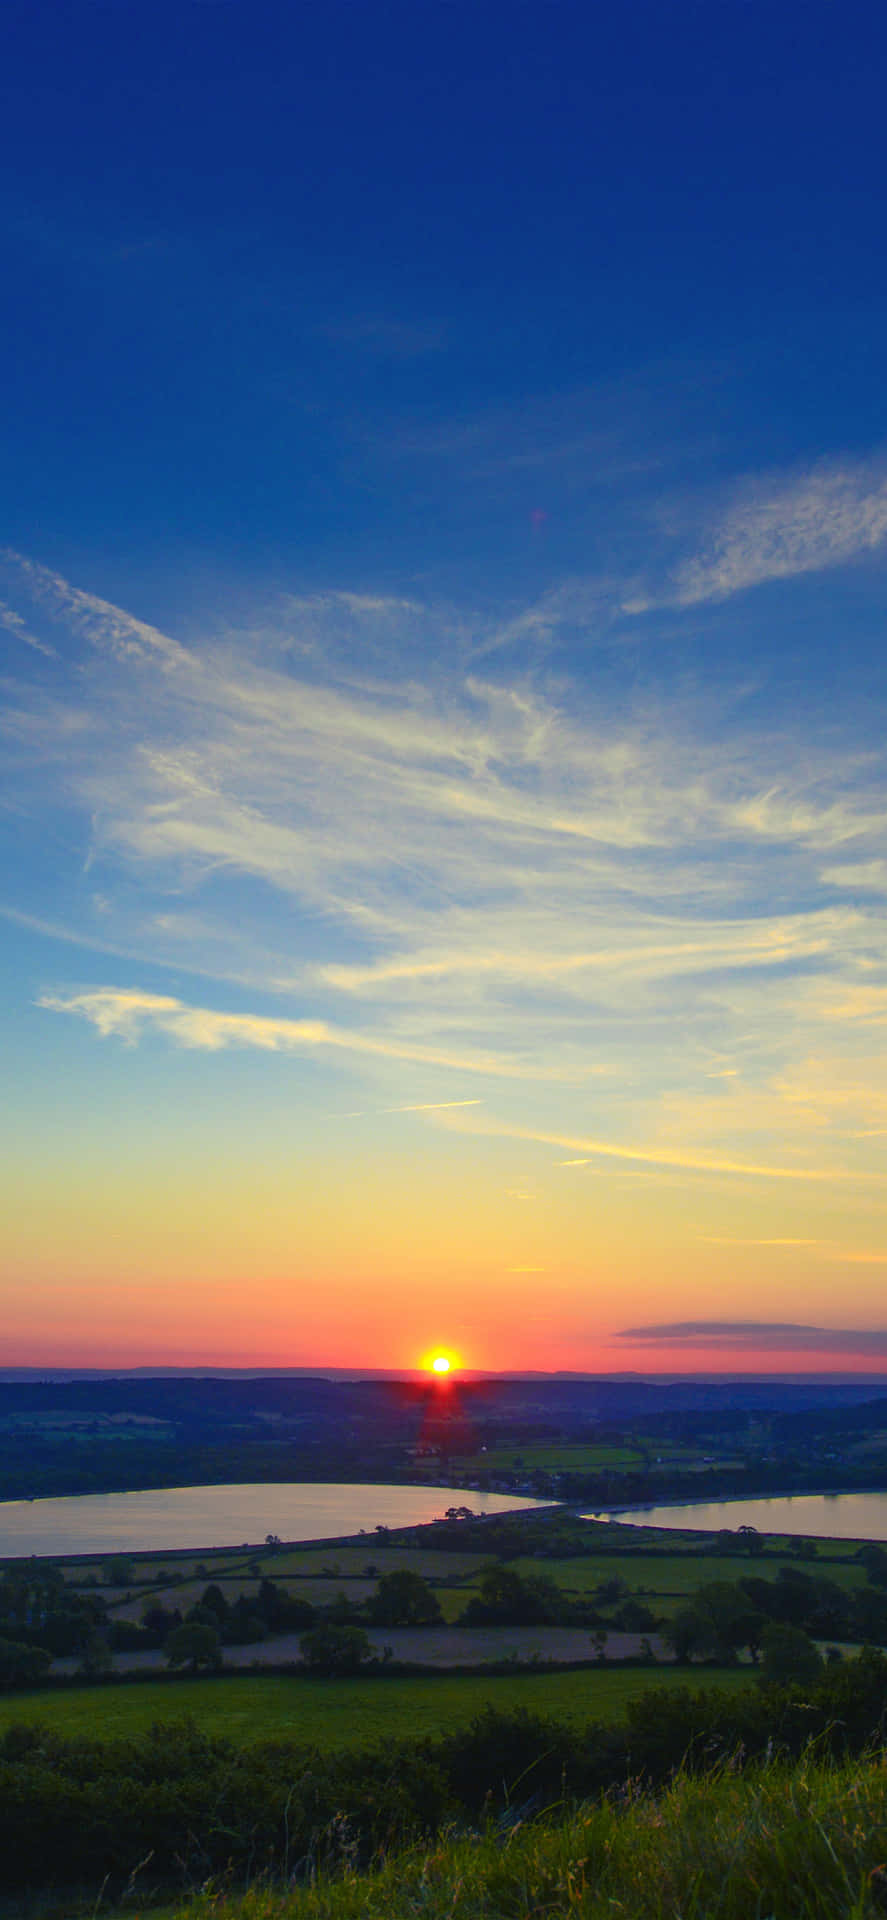 Iphone X Malibu Background Sunset From Mountain